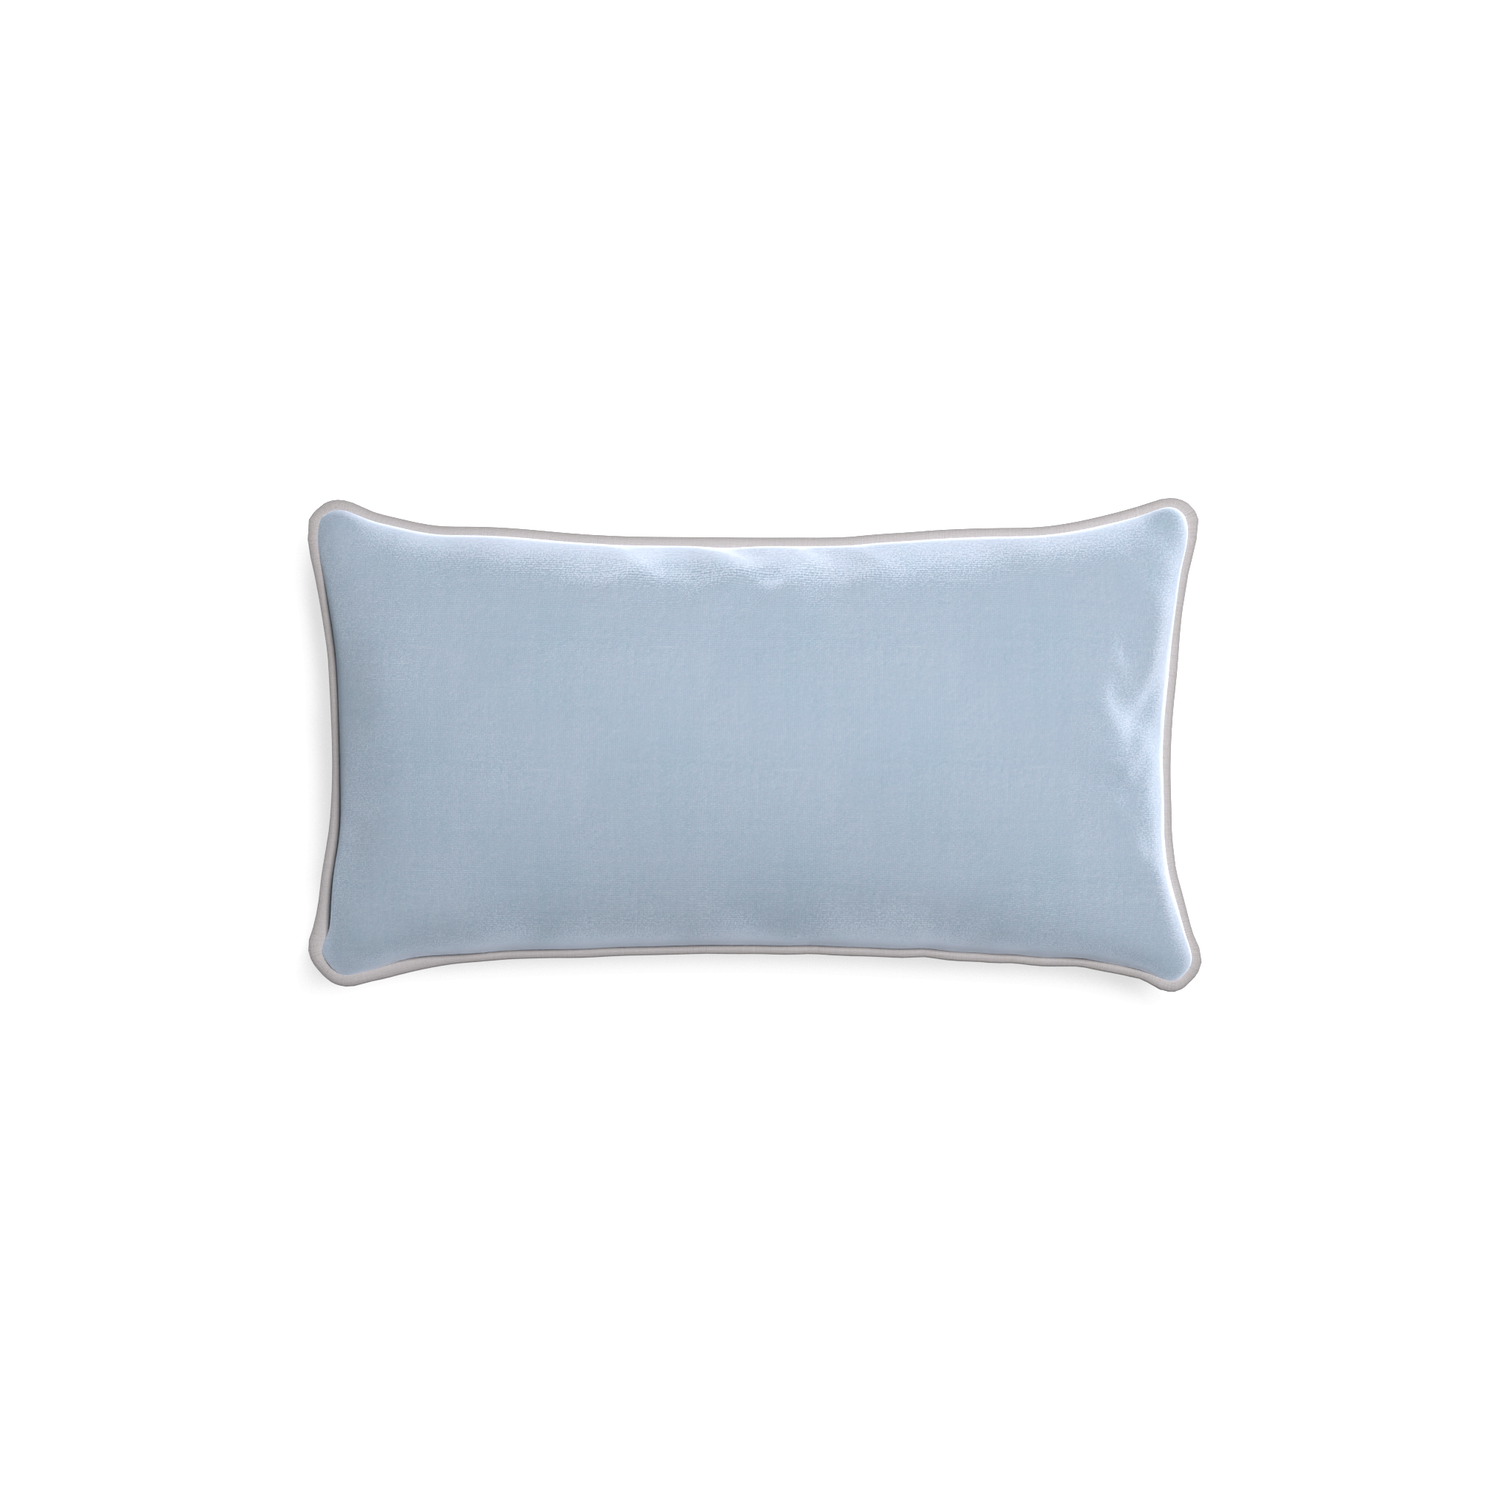 rectangle light blue velvet pillow with grey piping